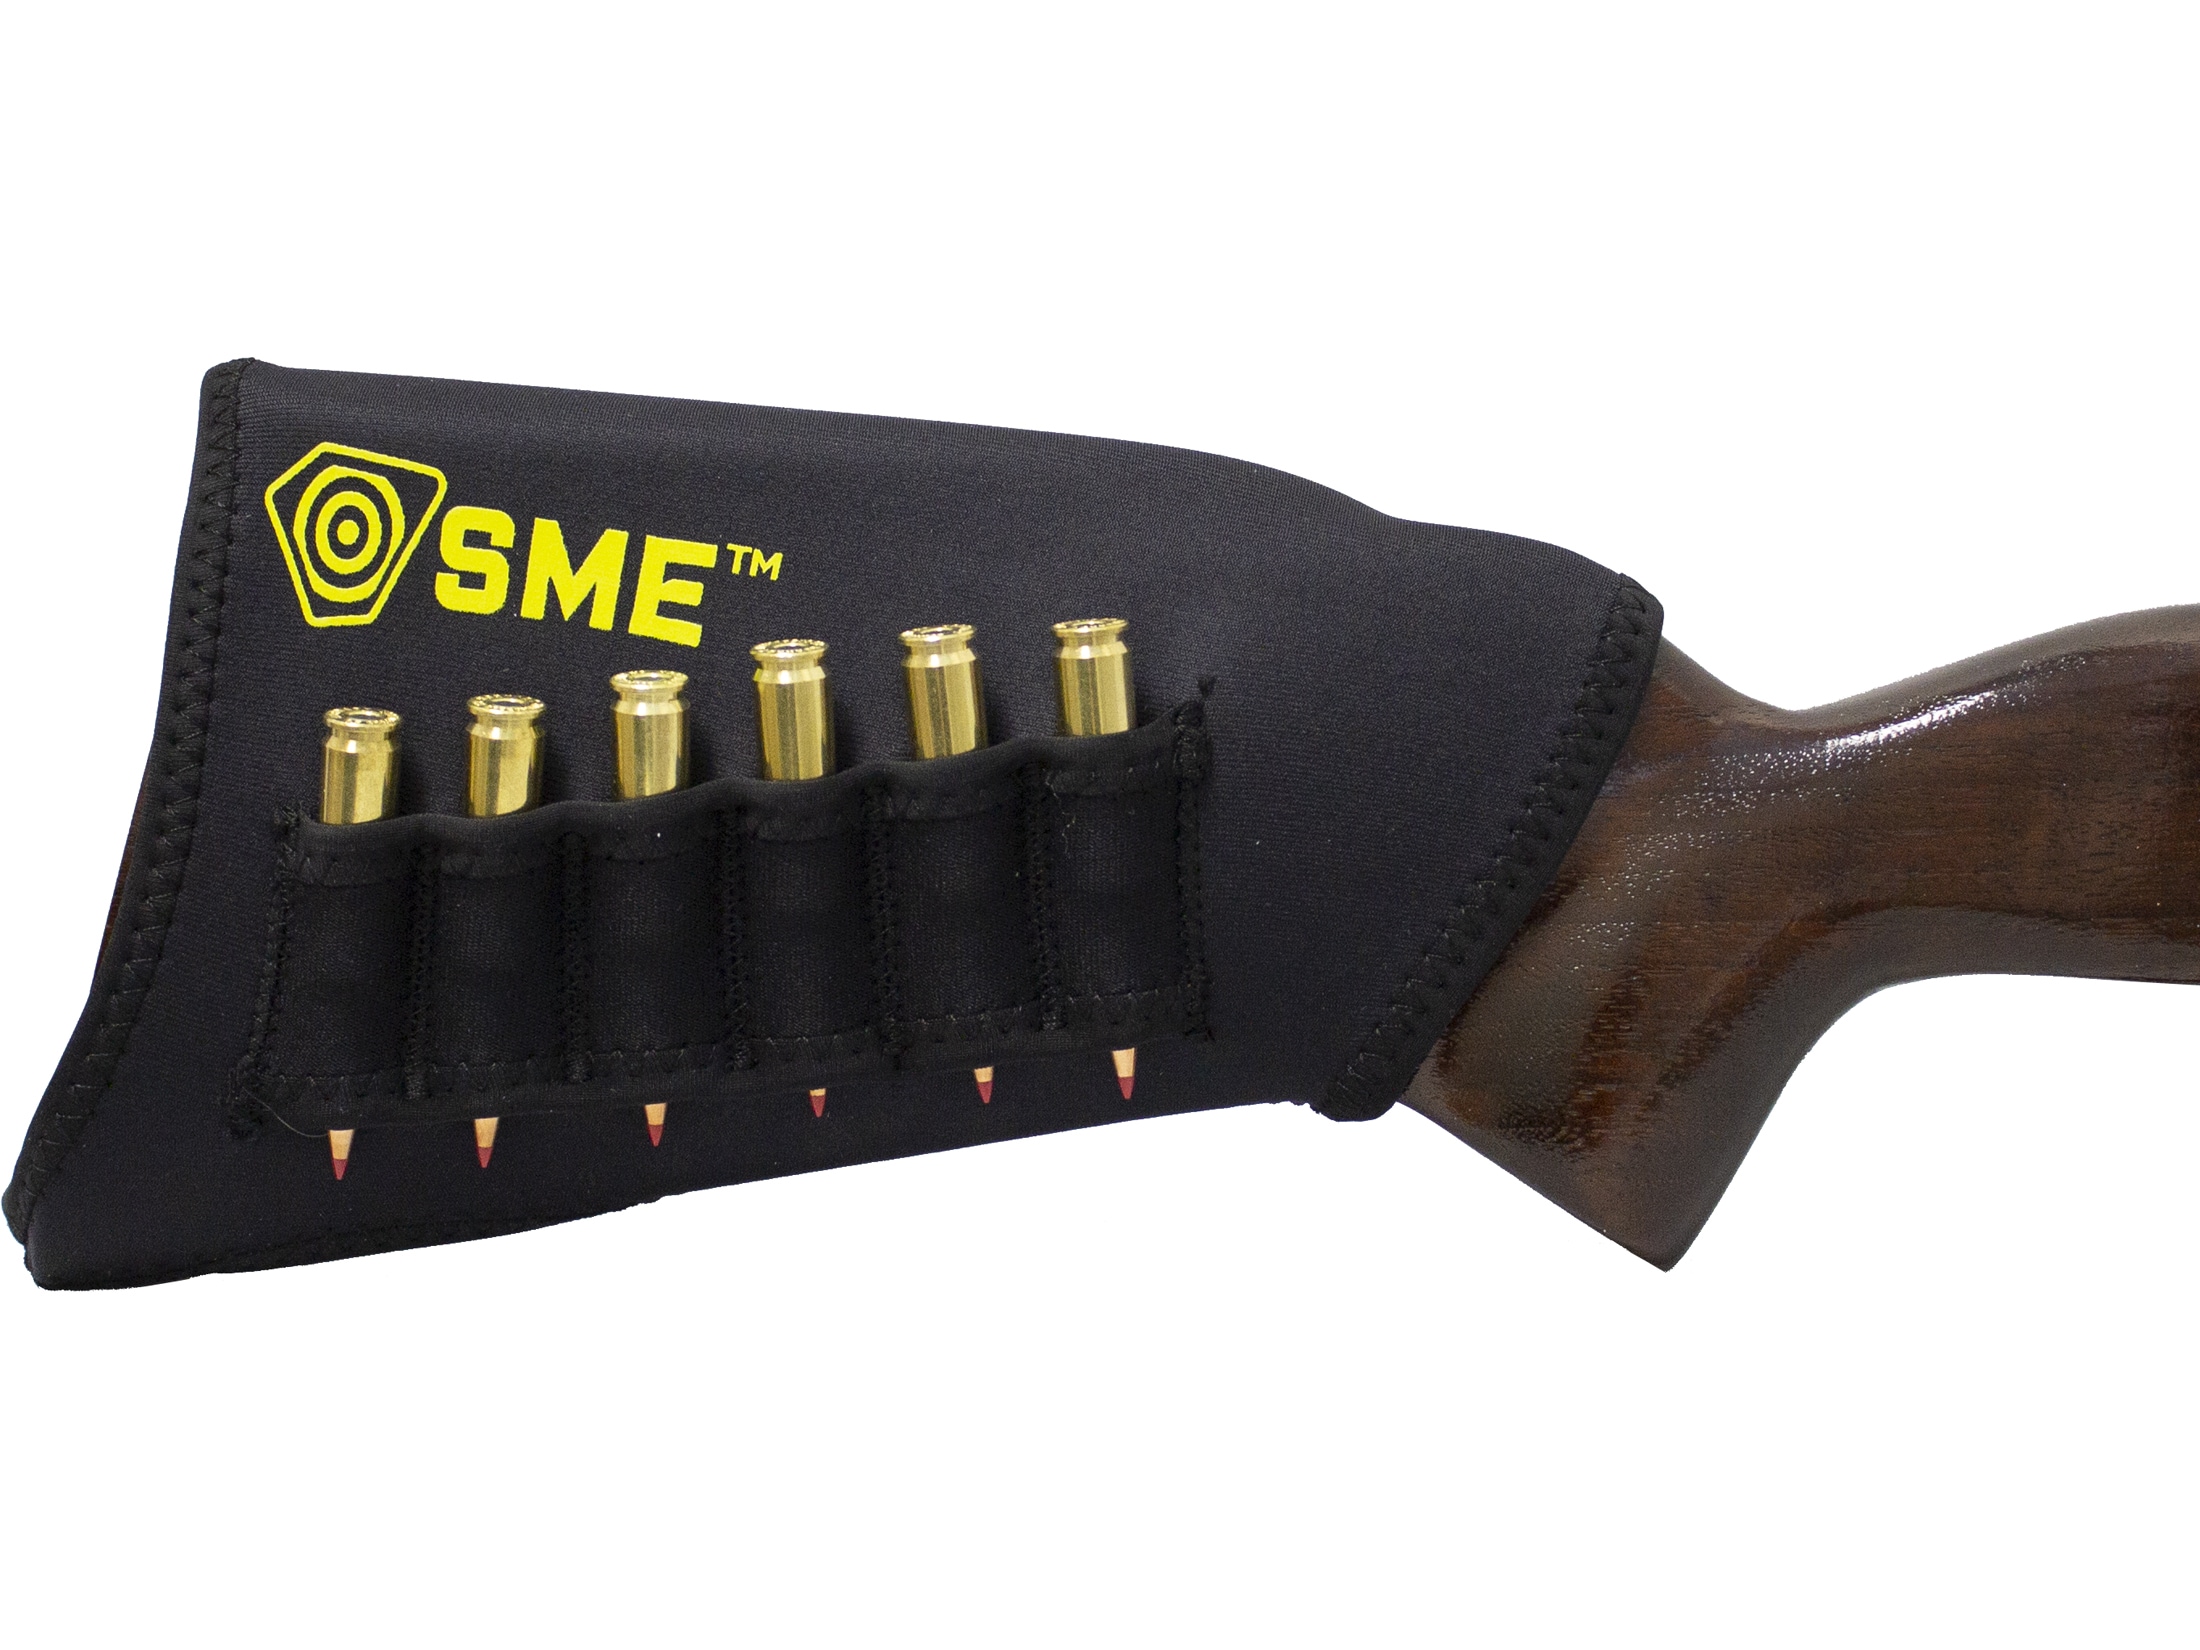 Beartooth Comb Raising Kit for Rifles and Shotguns Hunting Cheekpad Shooting 